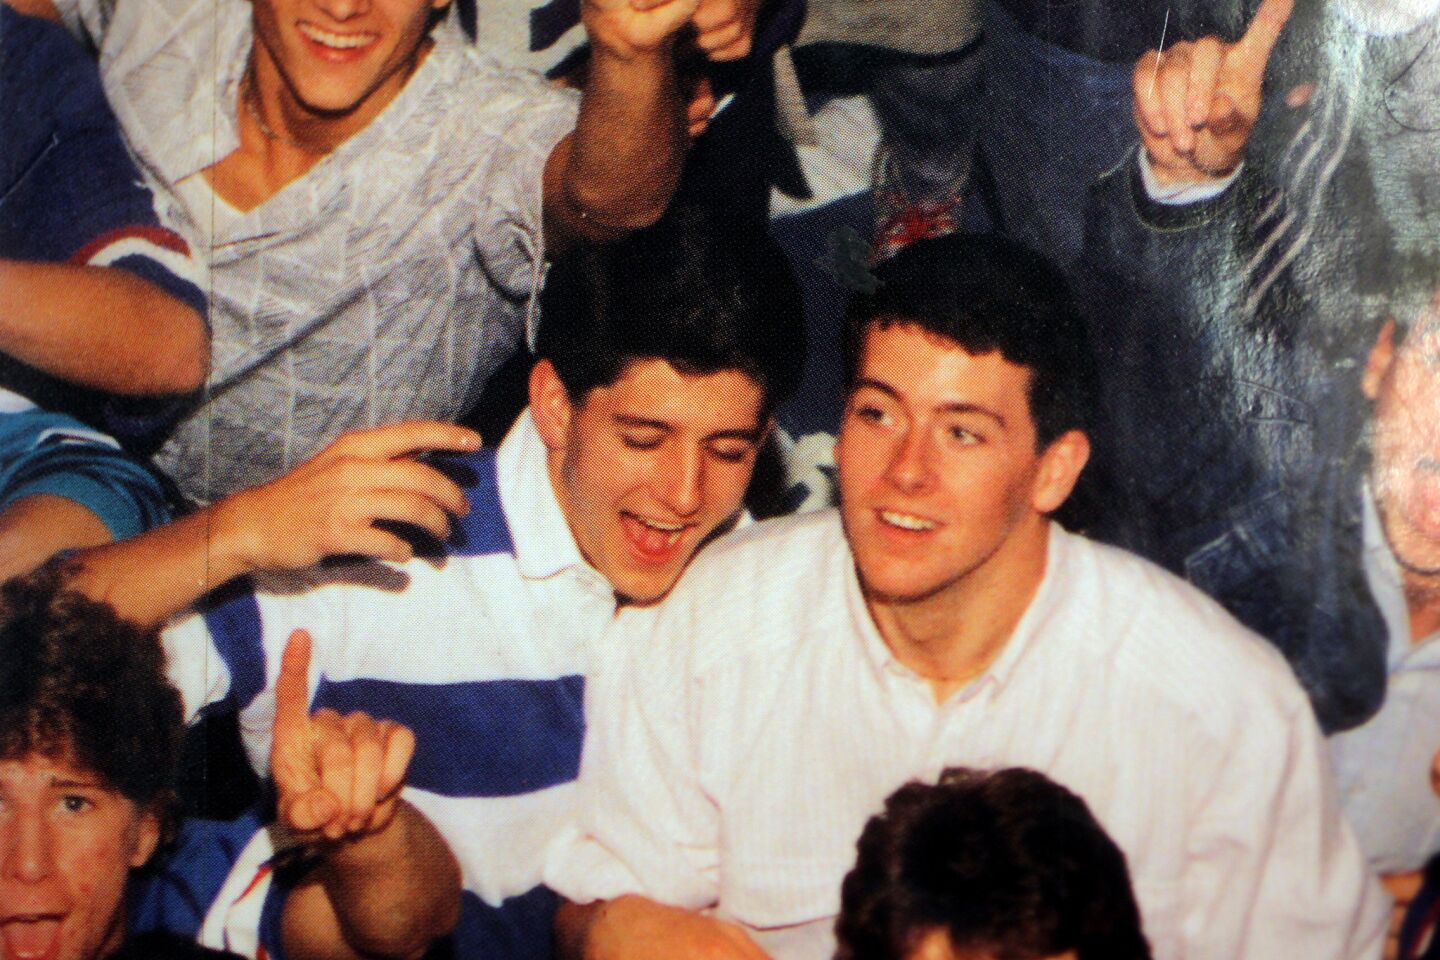 Paul Ryan in high school